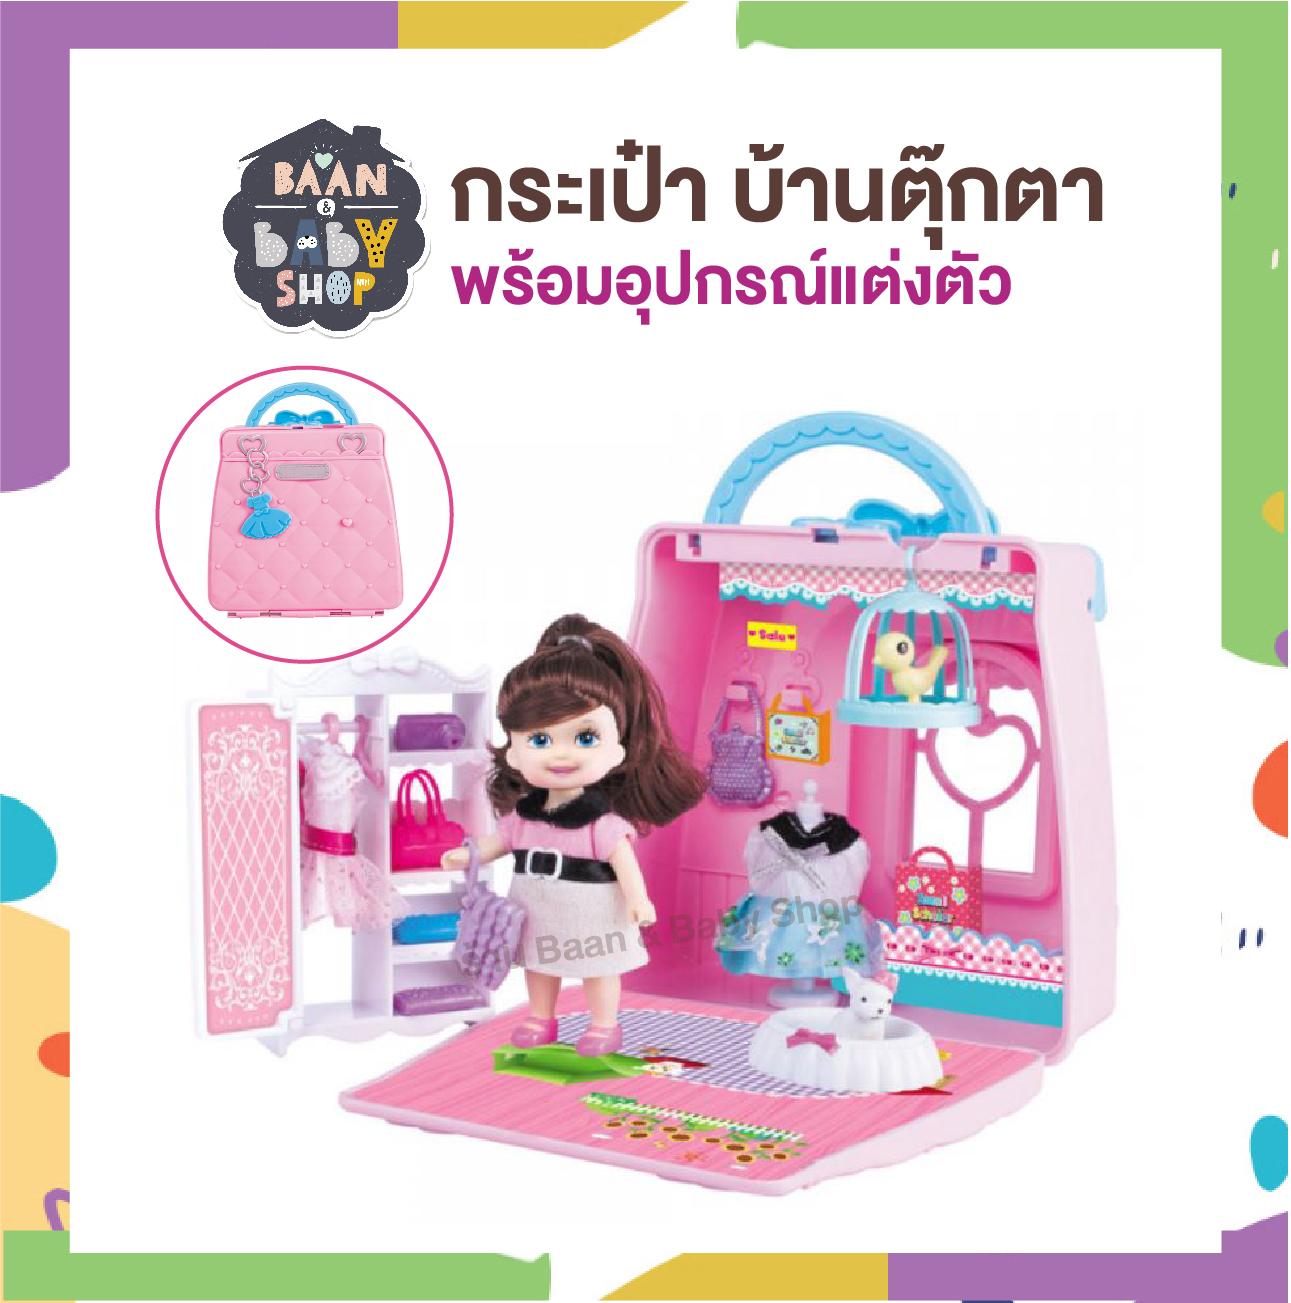 Similan กระเป๋าบ้านตุ๊กตา พร้อมอุปกรณ์แต่งตัว พับเก็บง่าย Play House Handbag for Kids Children Baby Doll House QL052